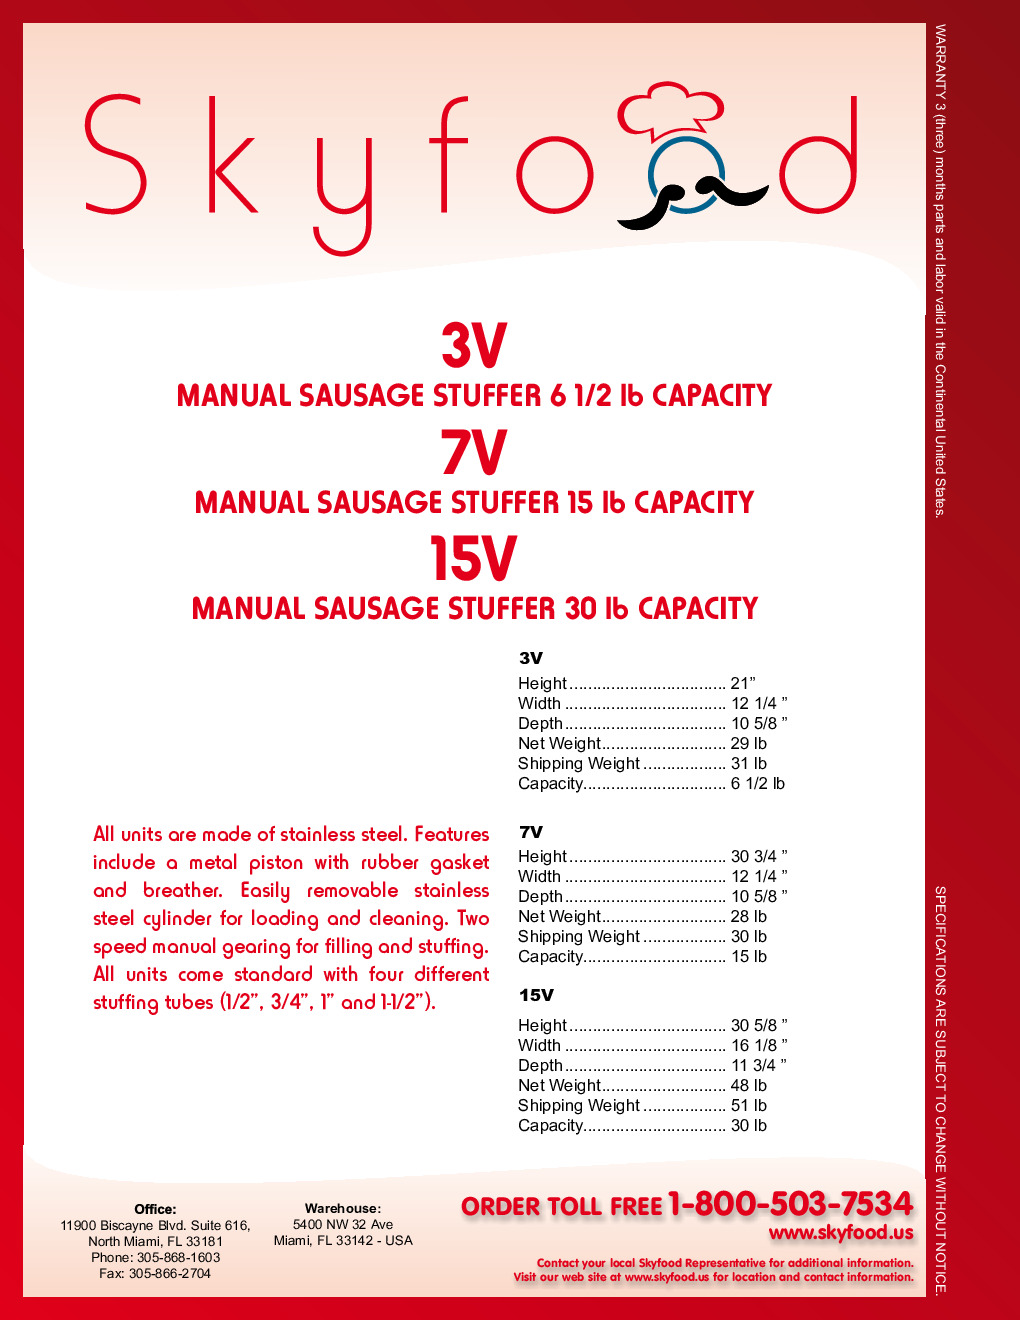 Skyfood 7V Manual Sausage Stuffer